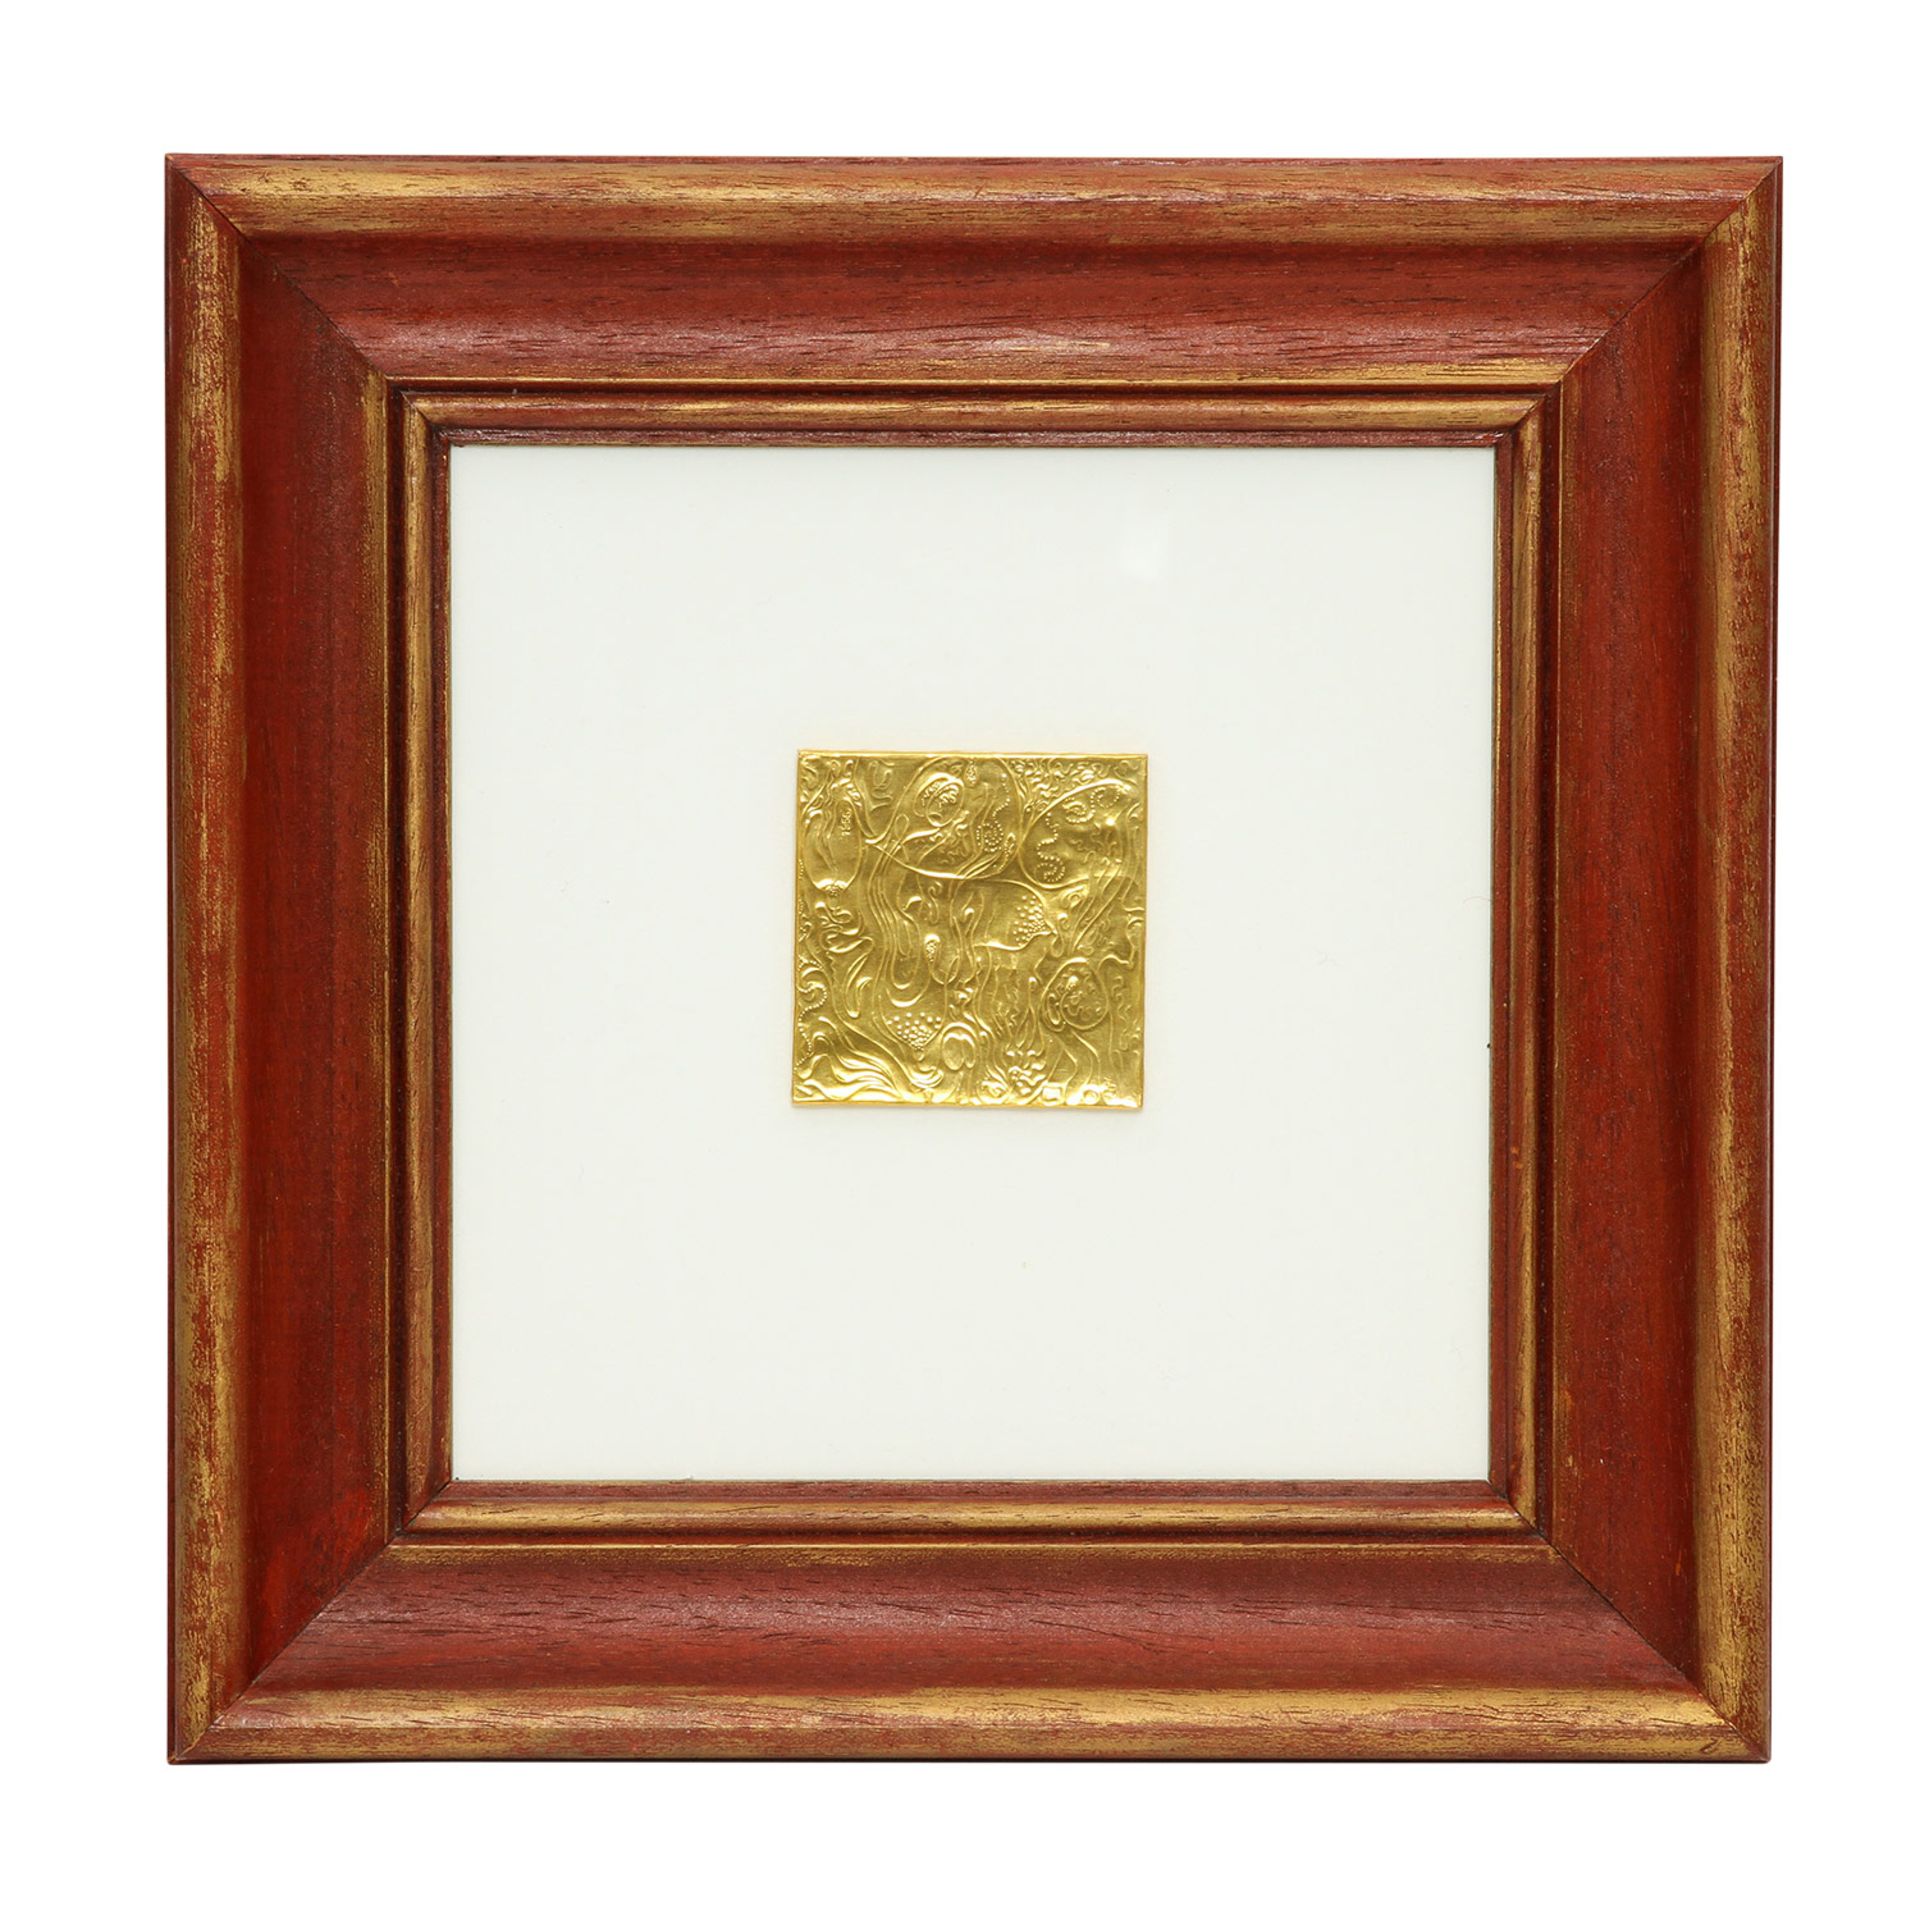 Goldminiatur "Semé" (1966) von E. BURGEL,Gold 900, gerieben + ziseliert, quadratisch, auf Acryl